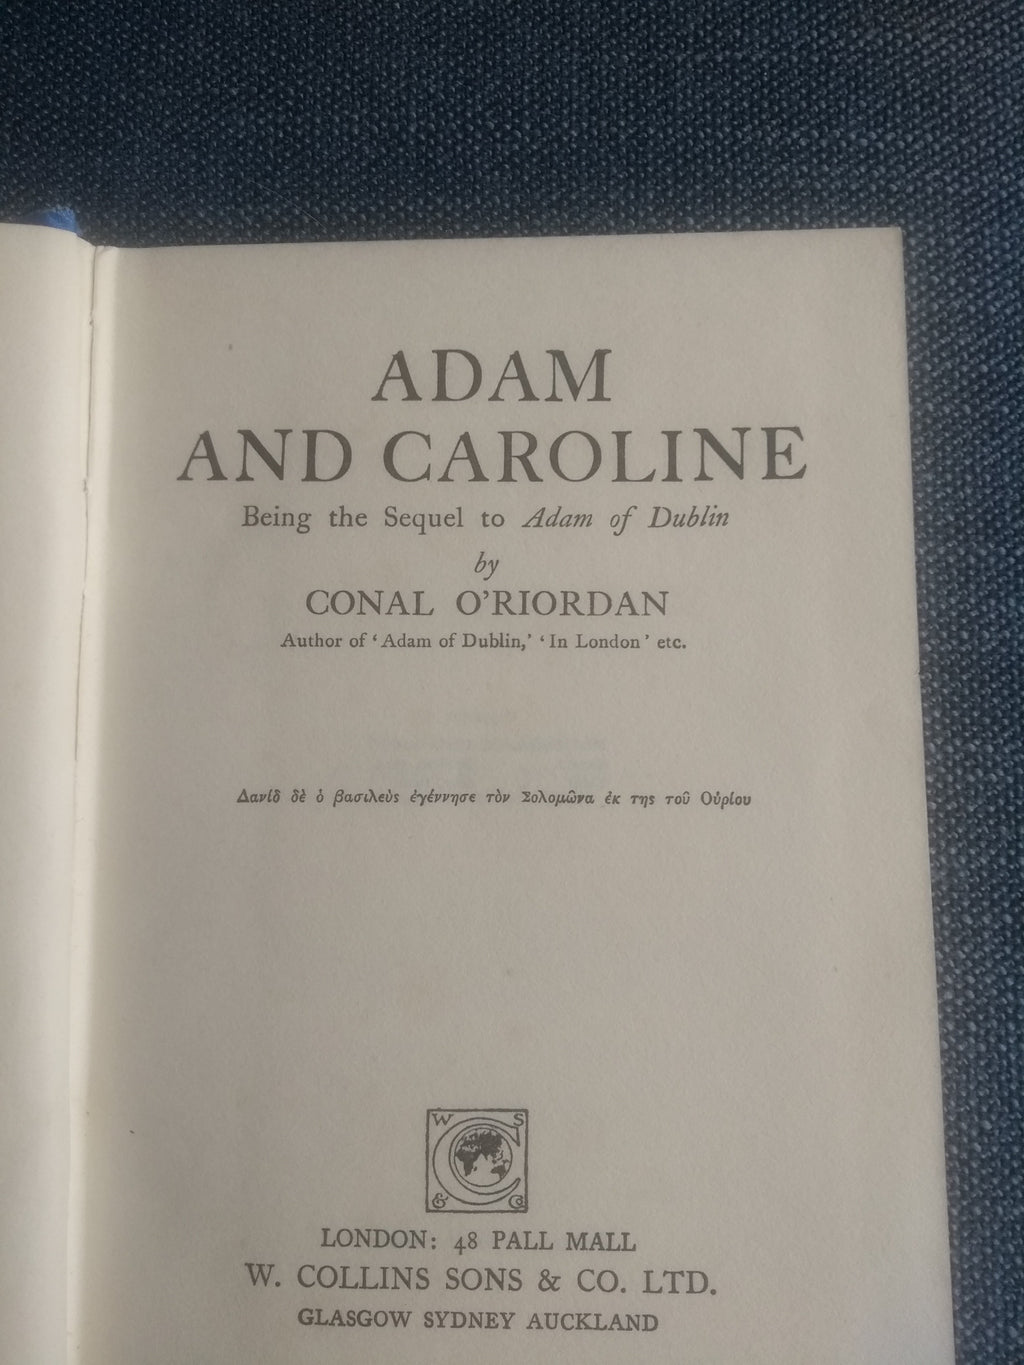 Adam And Caroline, By Conal O'Riordan